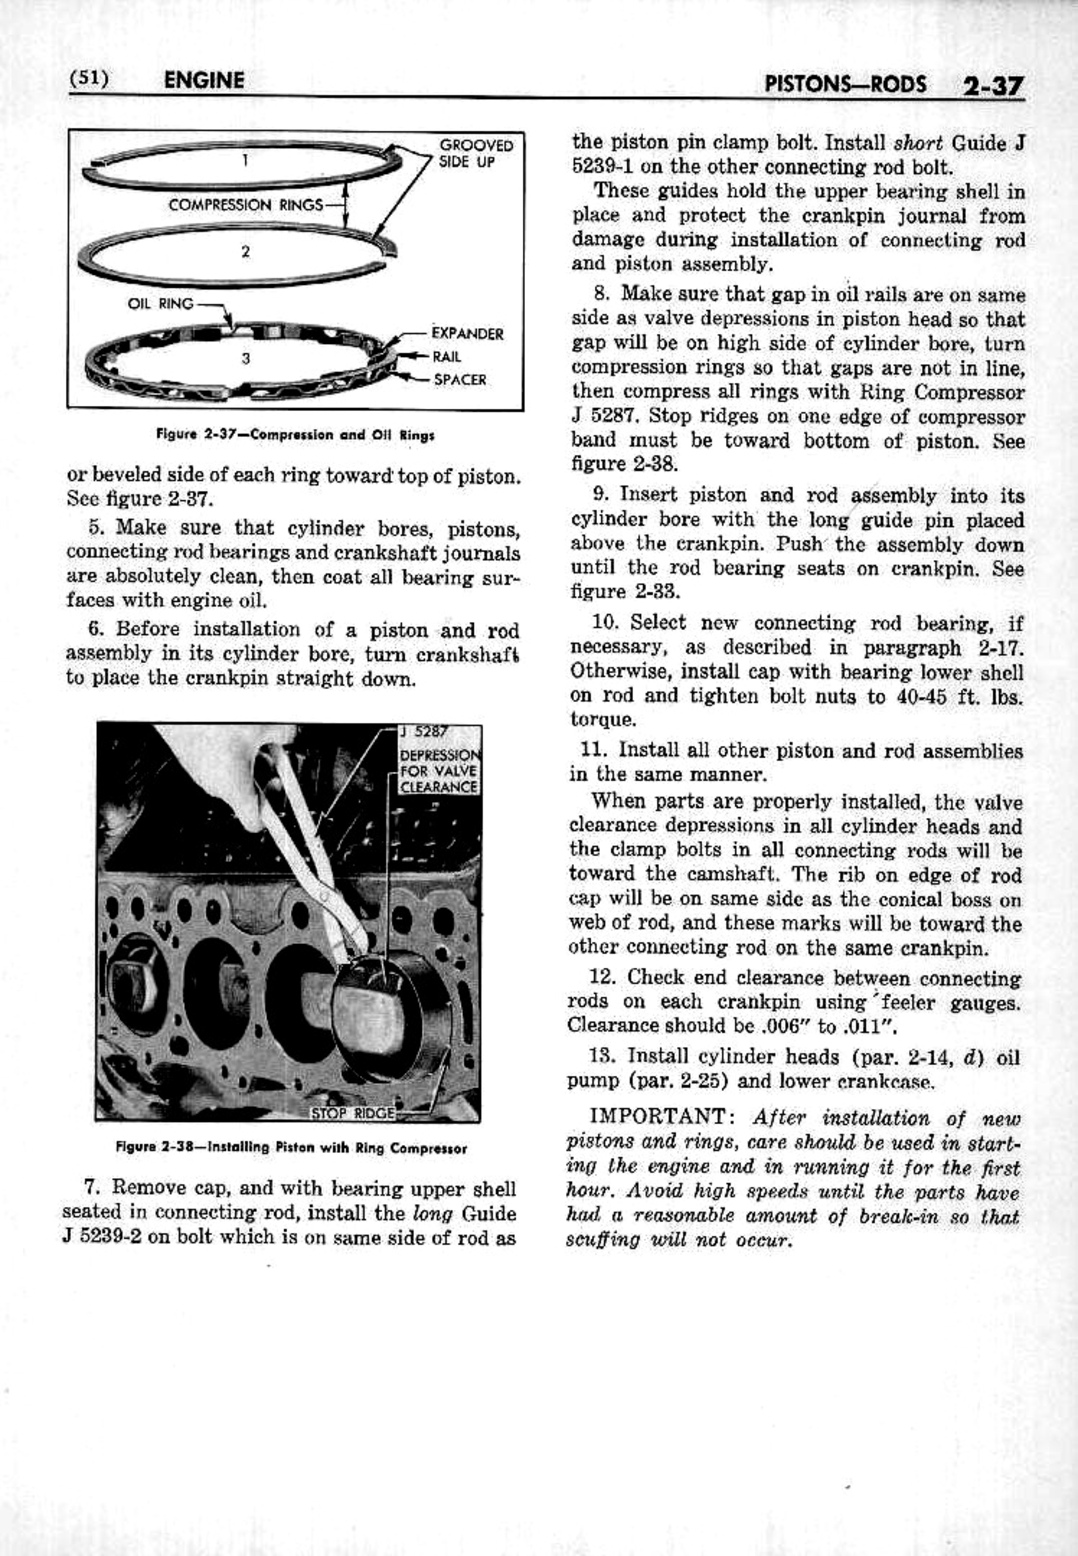 n_03 1953 Buick Shop Manual - Engine-037-037.jpg